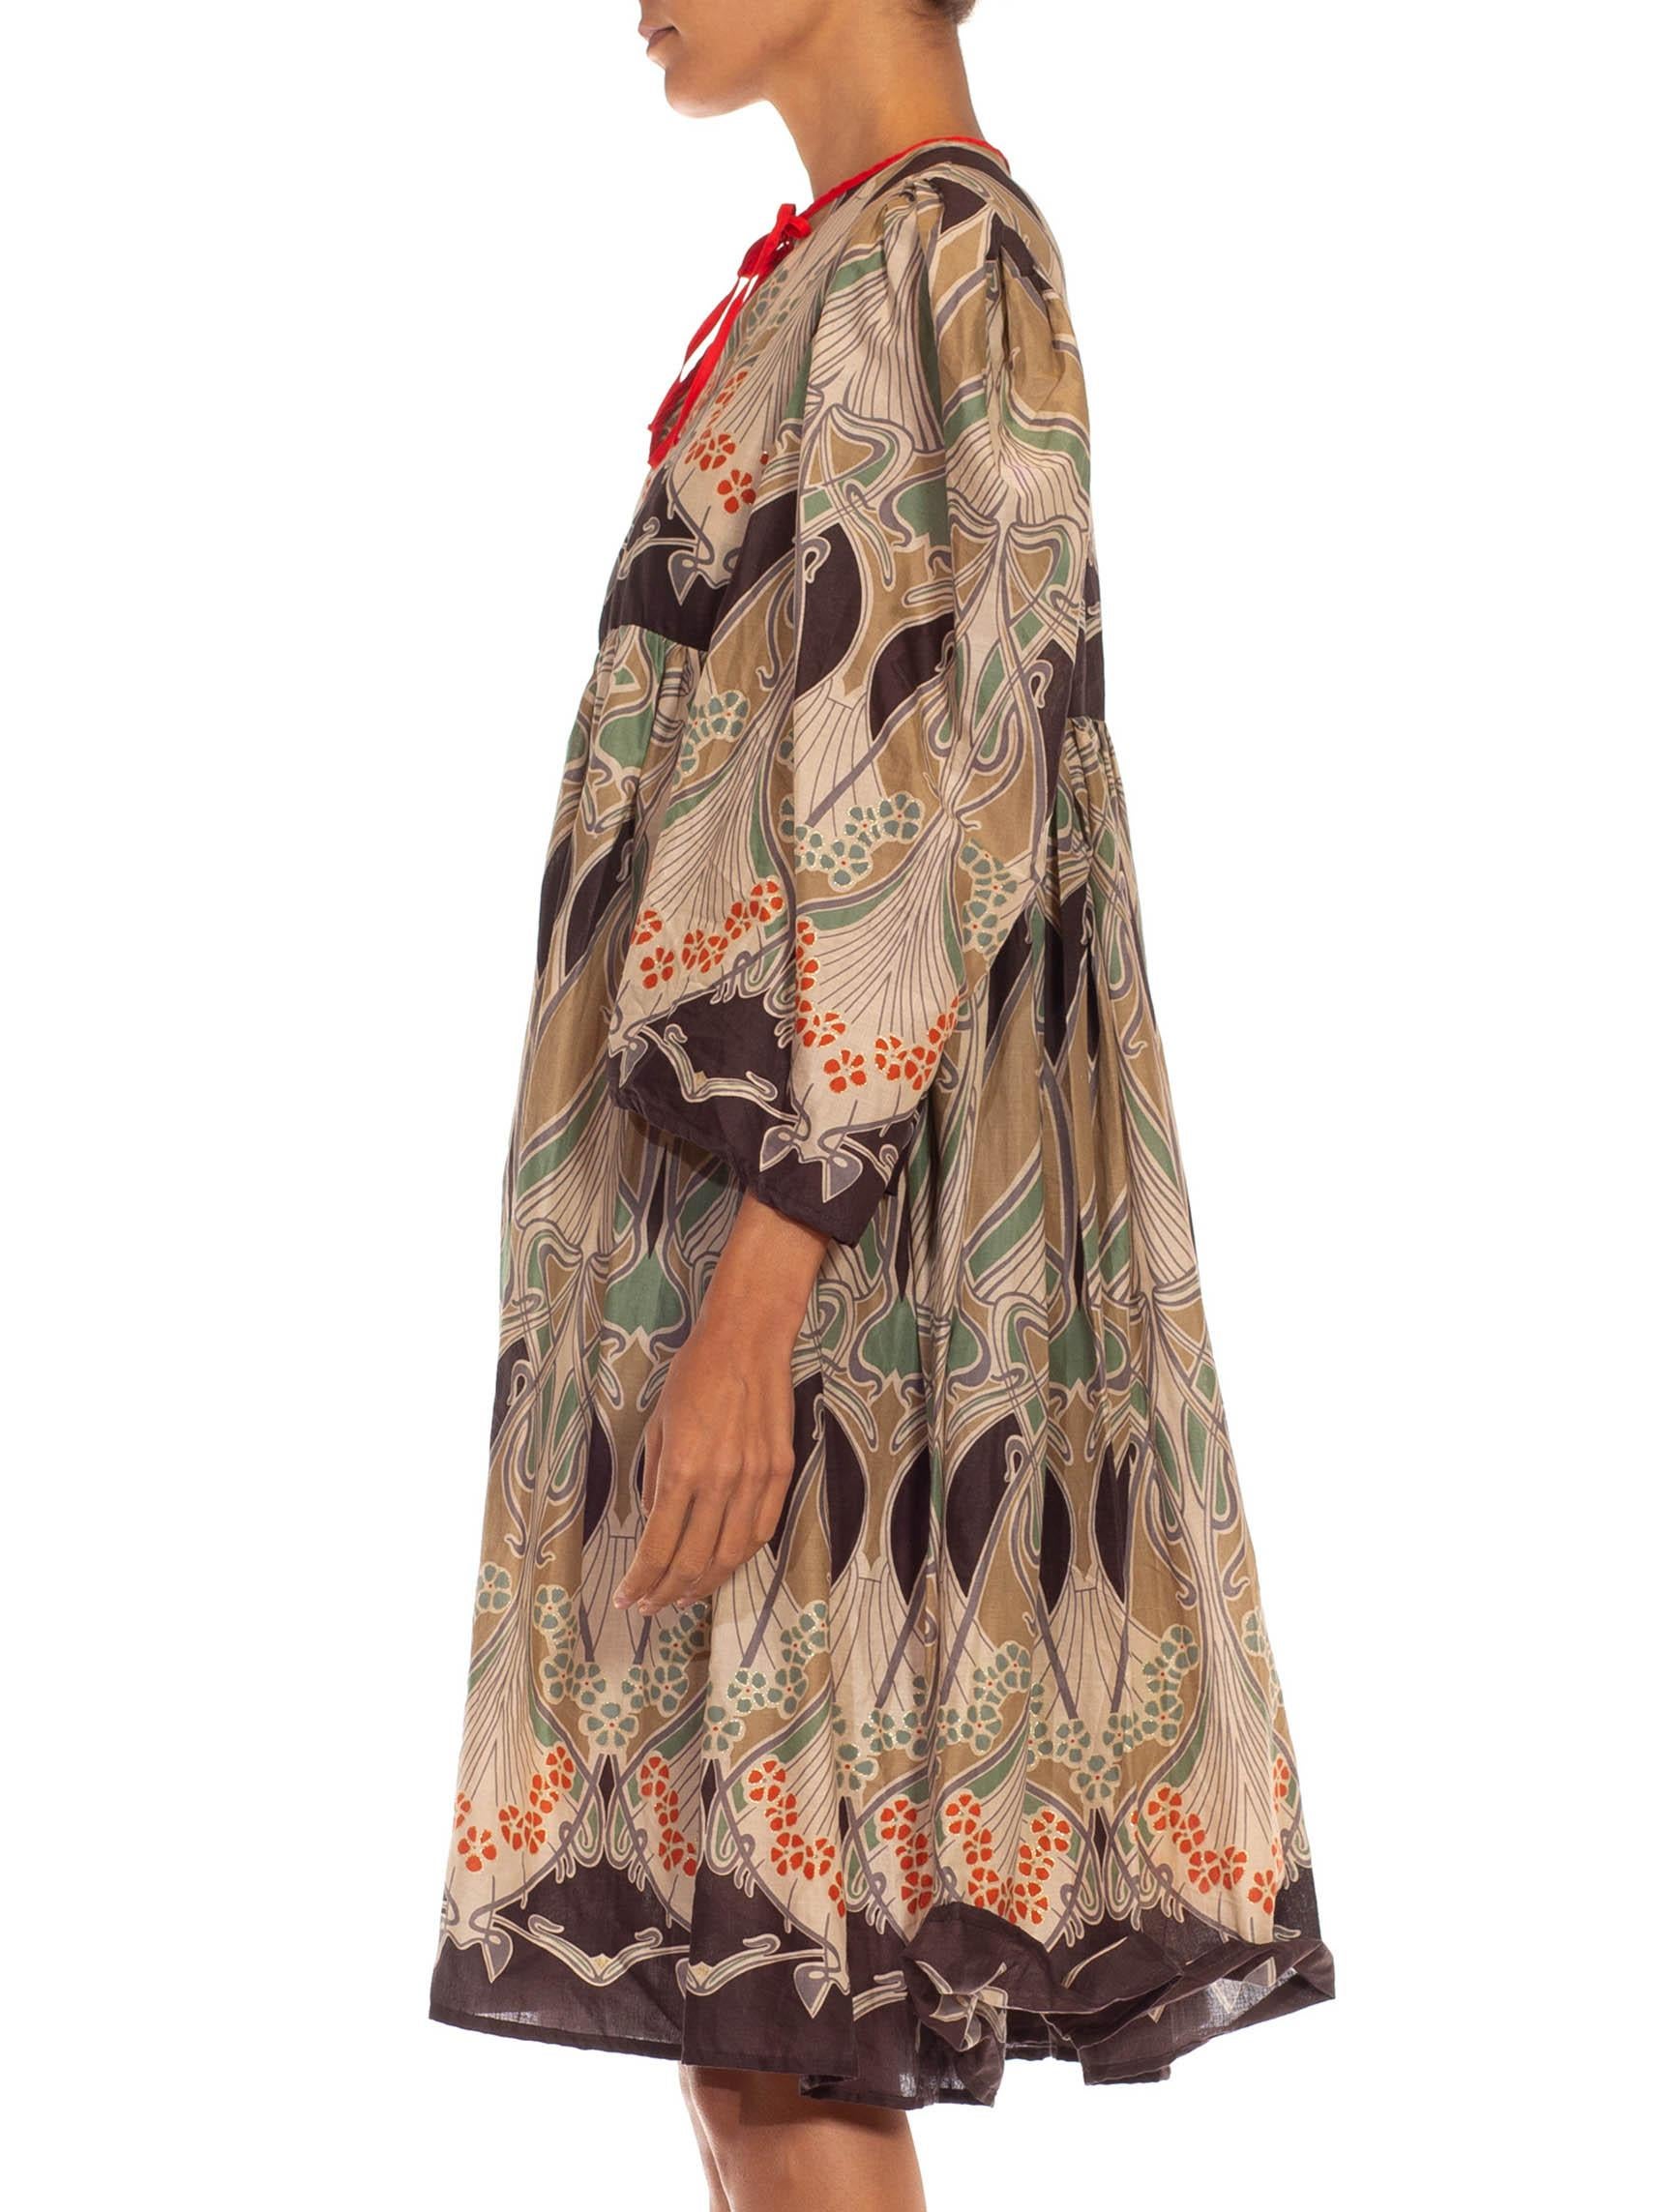 1970S LIBERTY OF LONDON Brown & Neutral Tones Cotton Art Nouveau Metallic Printed Dress